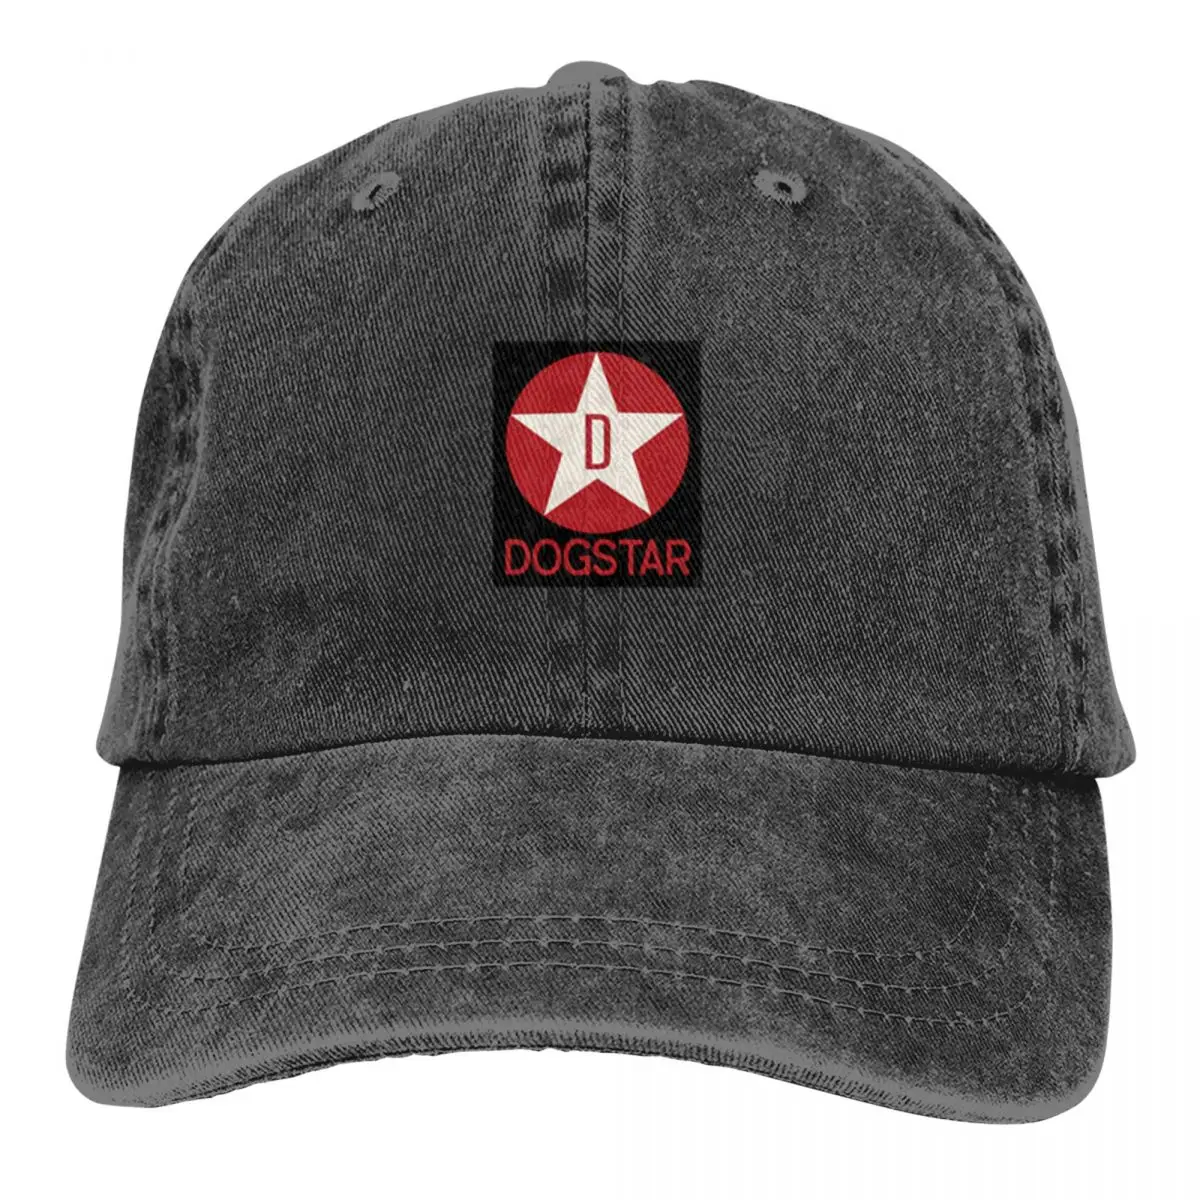 

DOGSTAR Logo (Keanu Reeves' Band) Fashion Gift A Baseball Cap